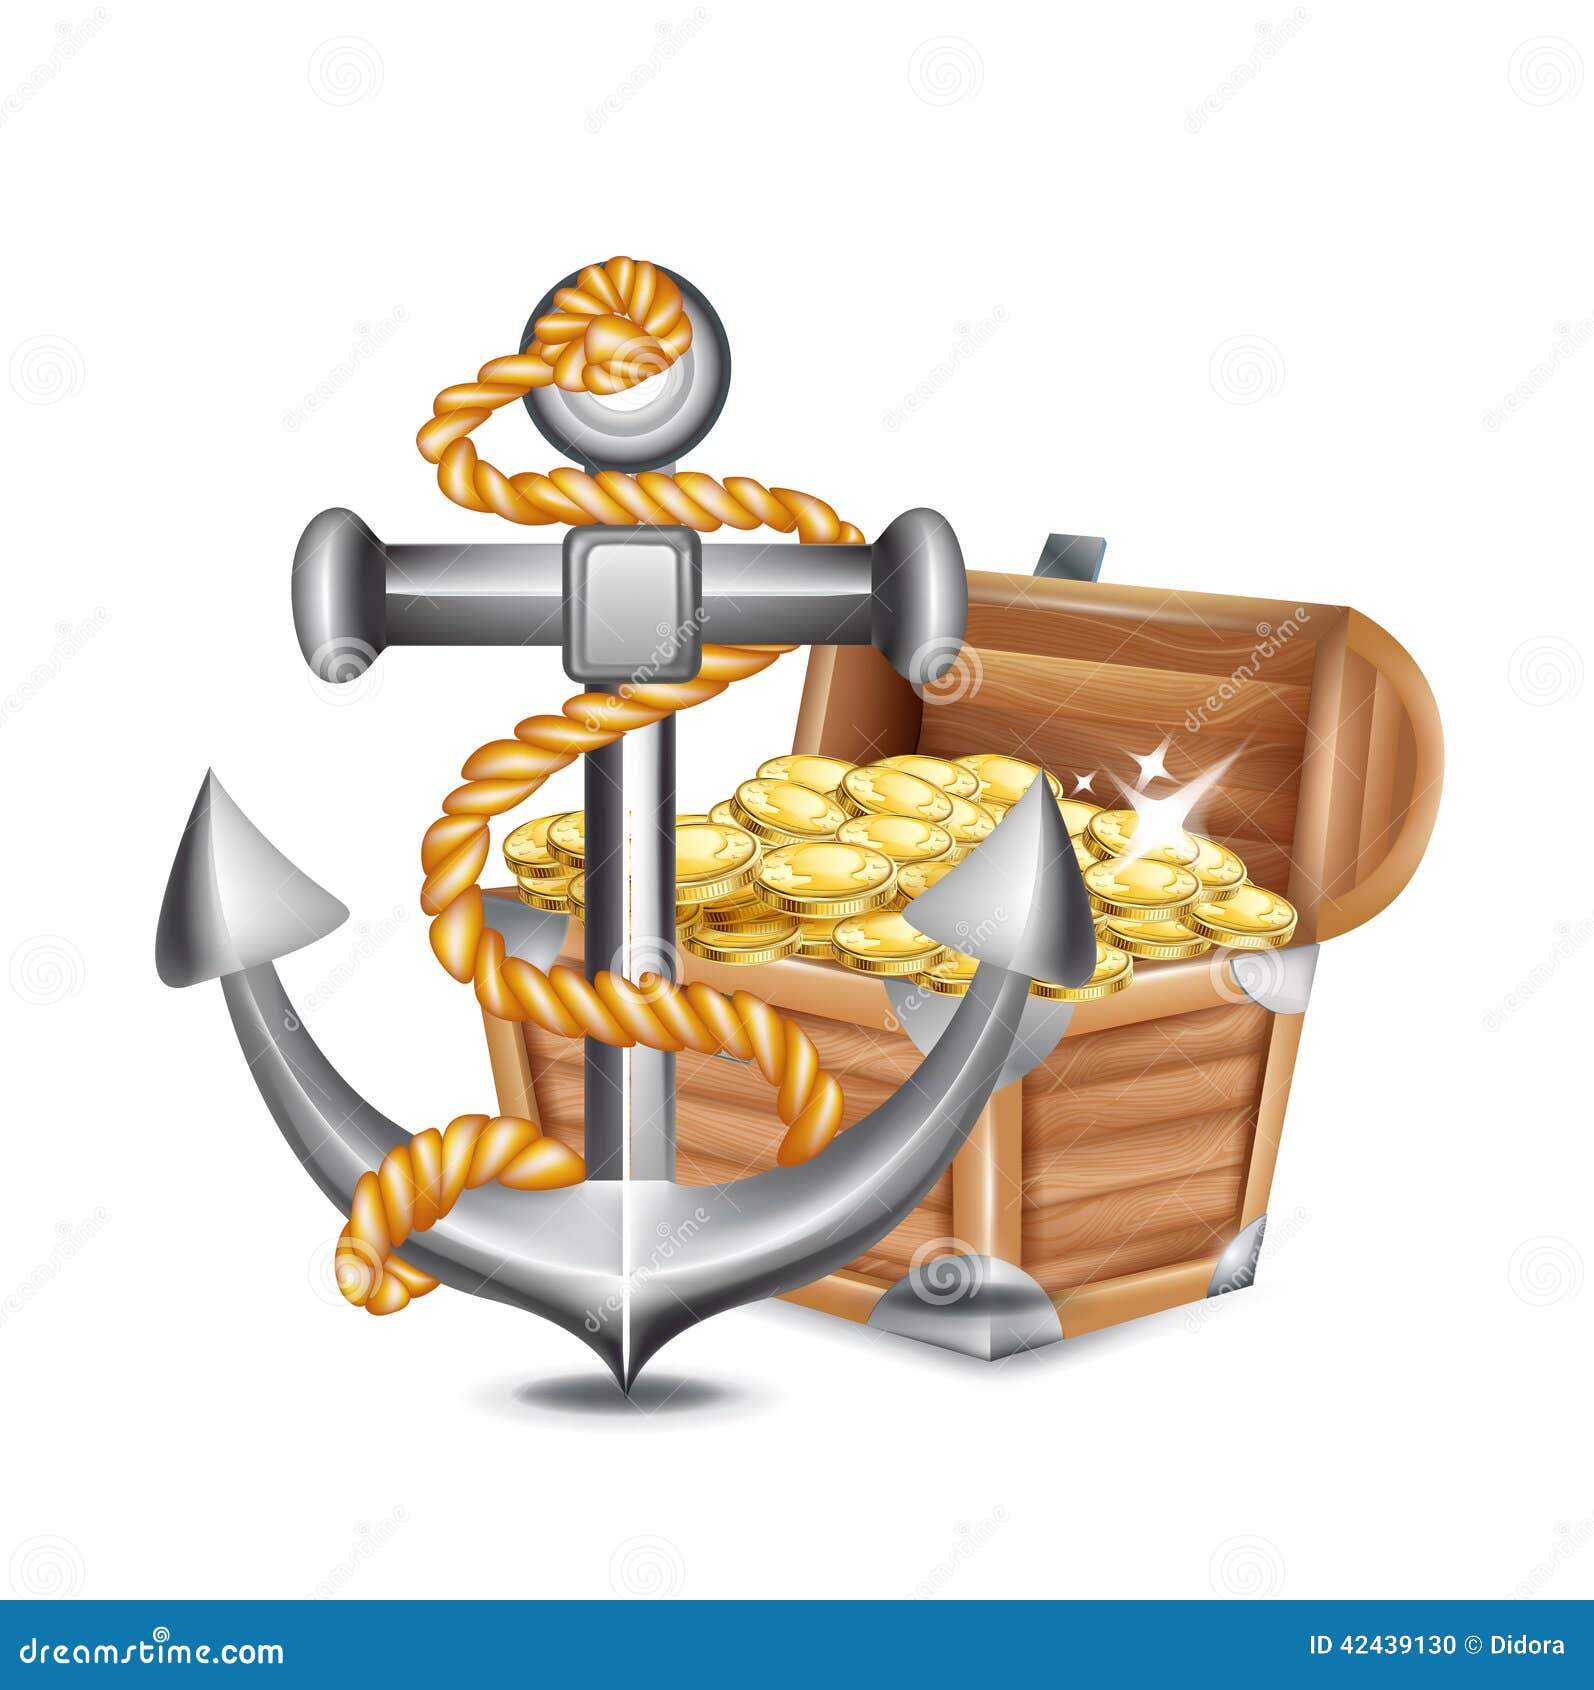 anchor-treasure-chest-golden-coins-isola